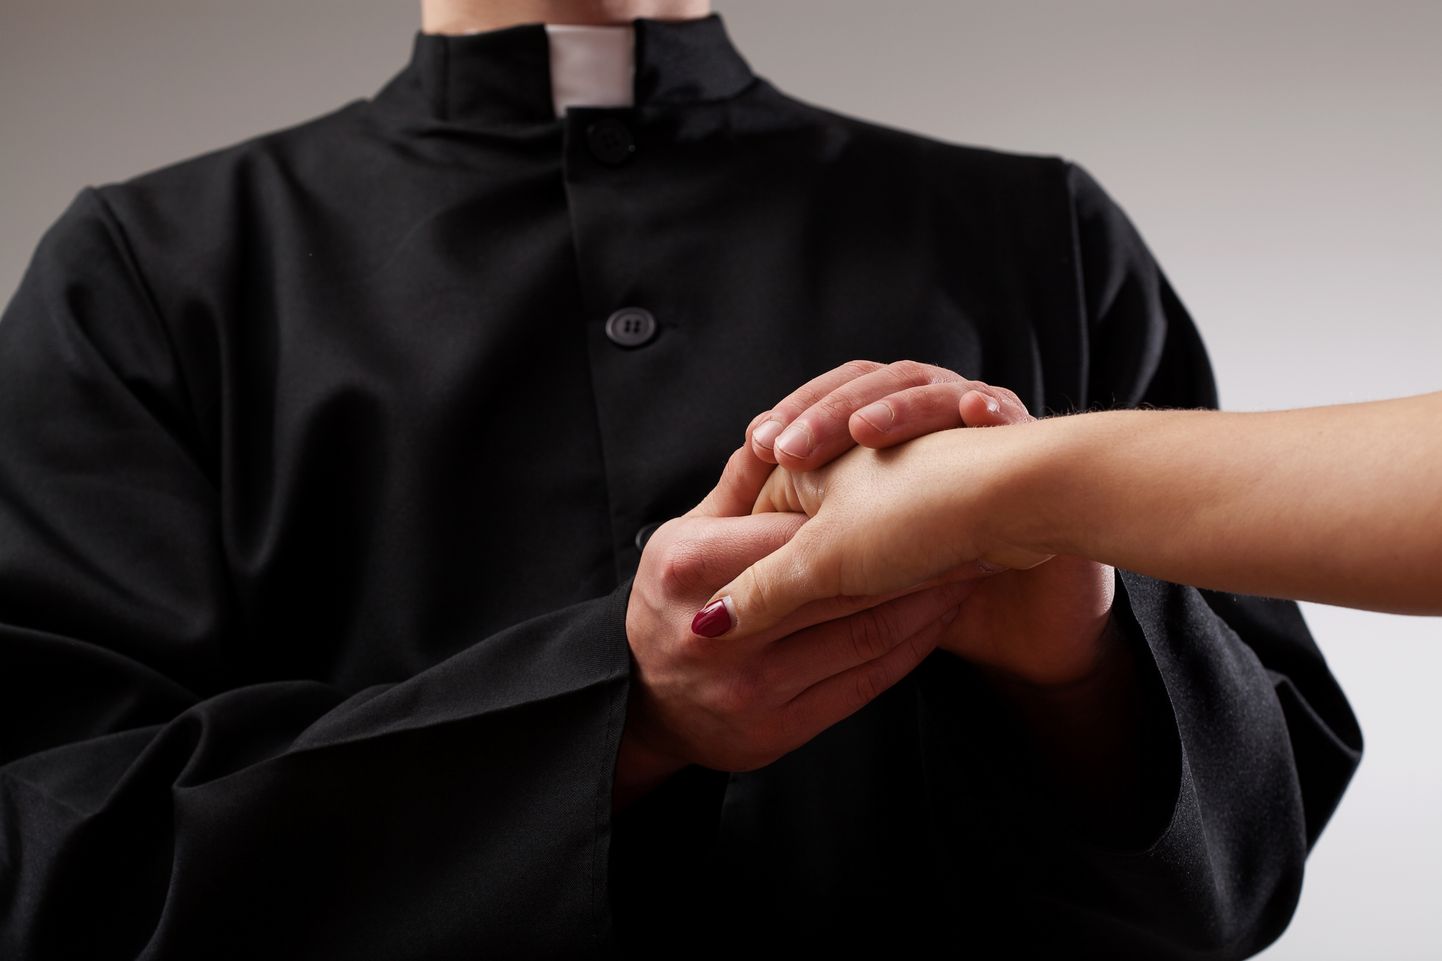 Preester naise kätt hoidmas. Pilt on illustratiivne.